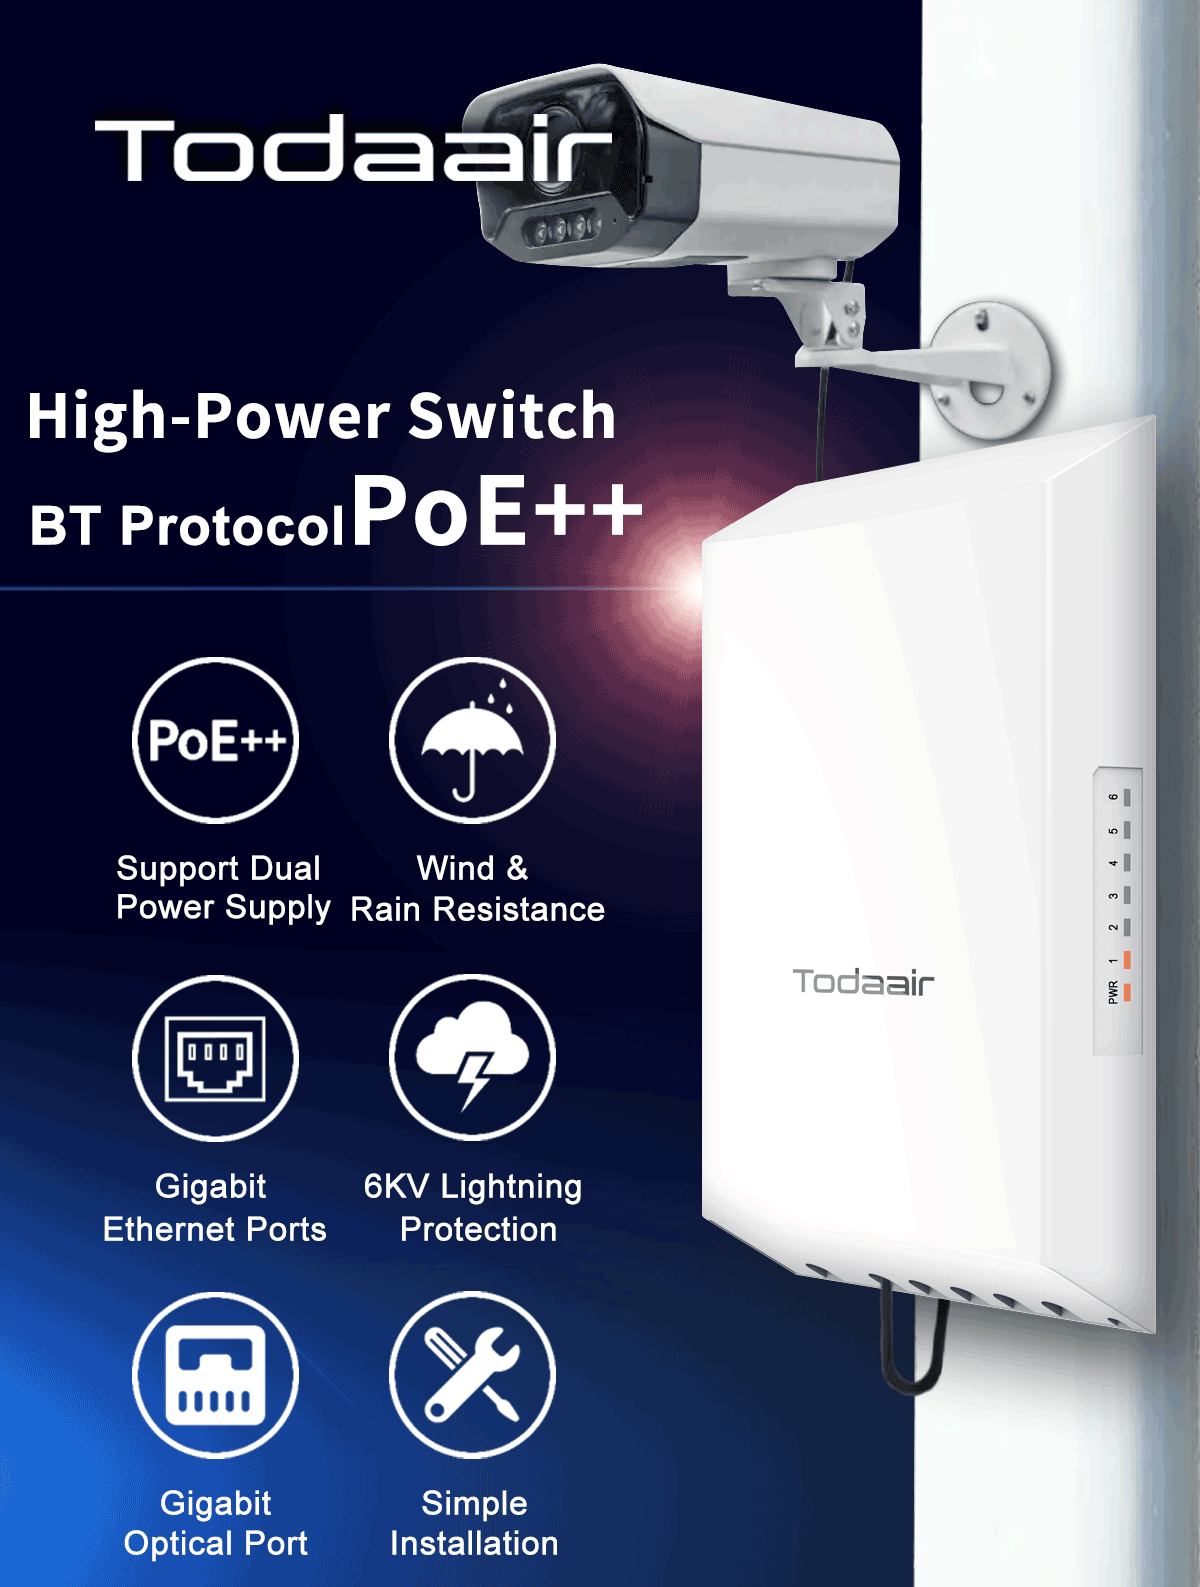 Todaair high power switch BT poe